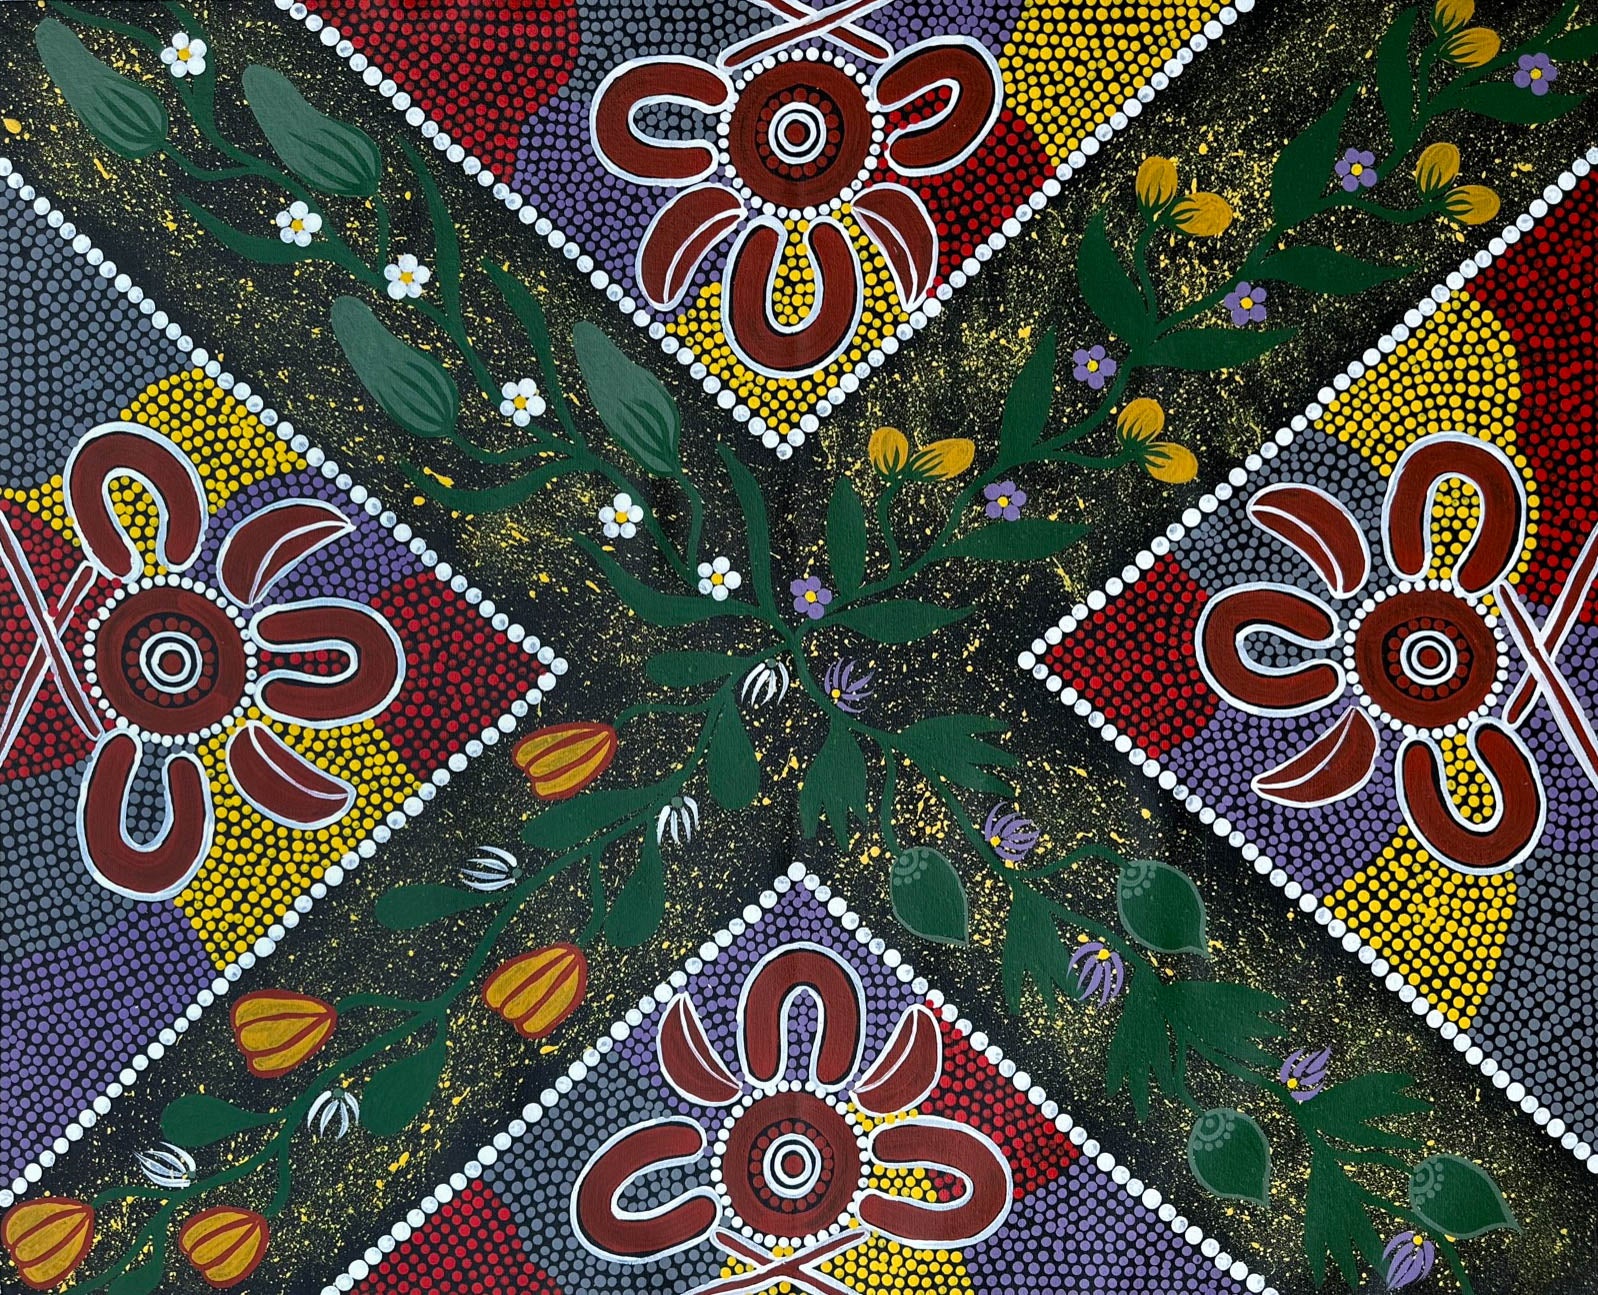 Linda Nakamarra Quinn + Bush Wild Passionfruit + Indigenous Art + Aboriginal Art + Indigenous Art + Australian Art + Dot Art Painting + Darwin Based Gallery + Contemporary Traditional Art Painting + Iconography + Symbolism + Art Story + Interior Design + Culture